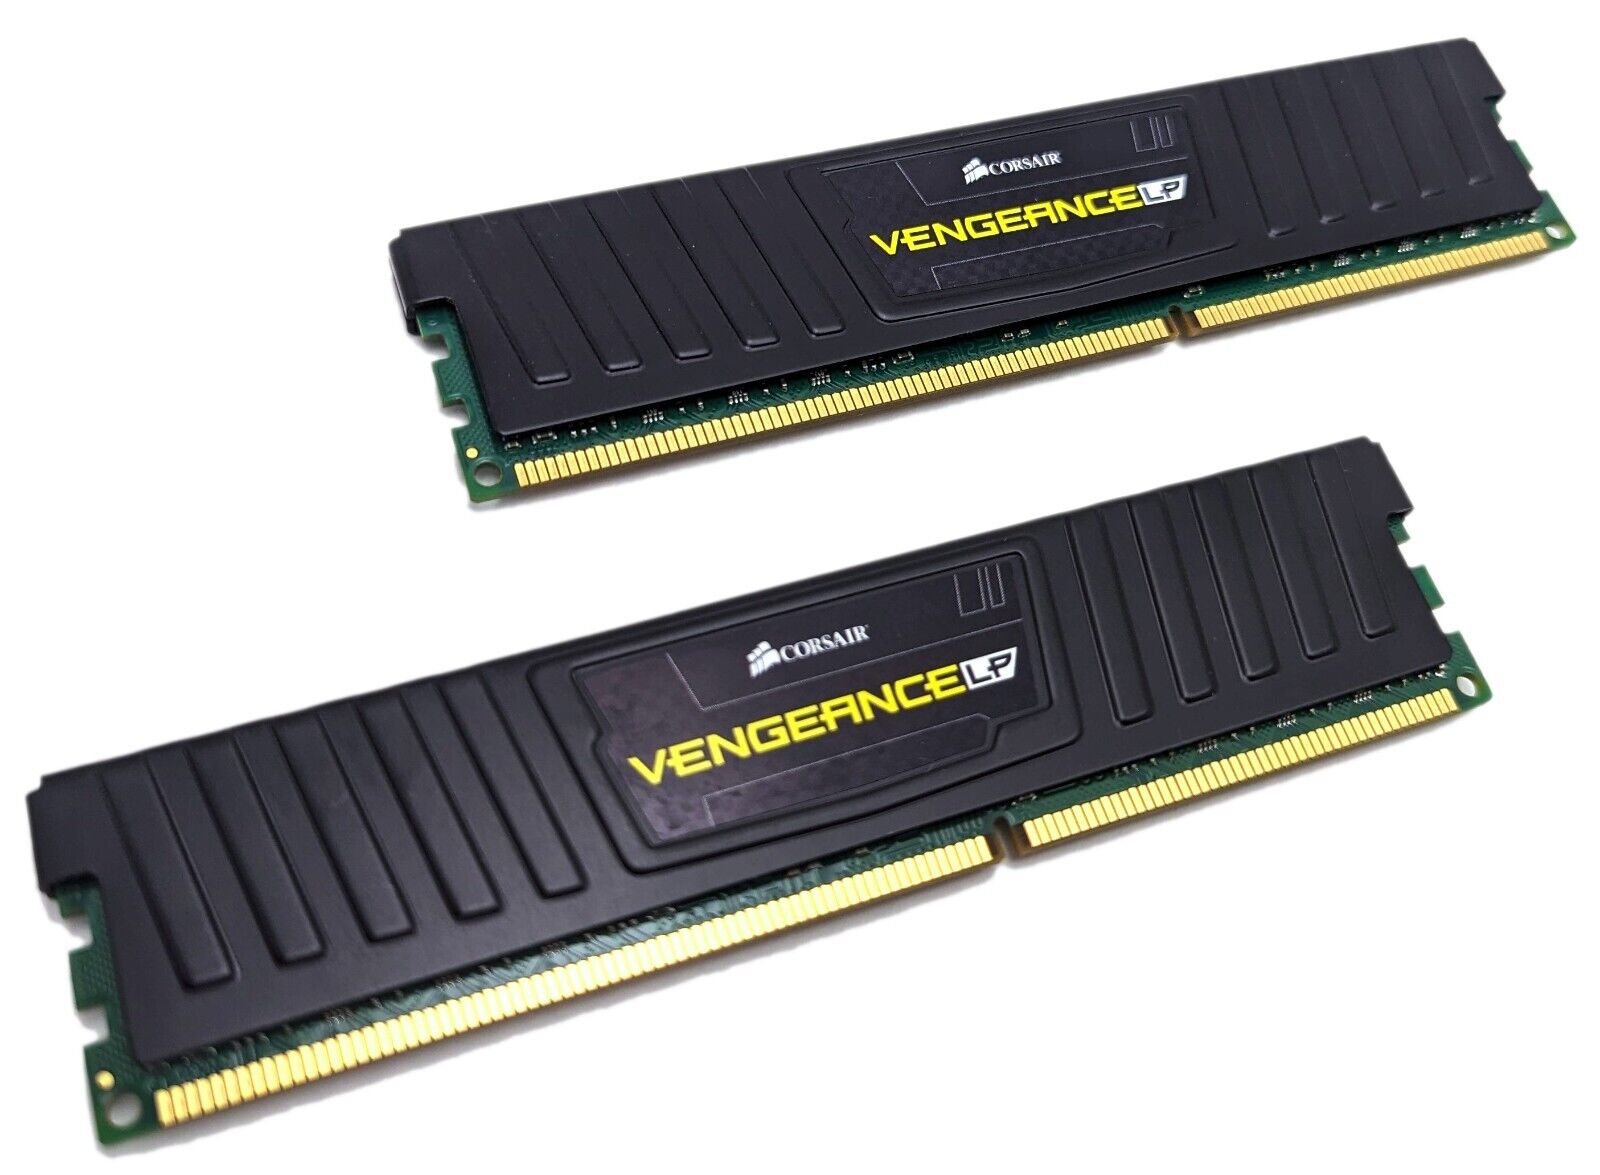 Corsair Vengeance LP 8GB Kit (2x4GB) DDR3 1600MHz PC3-12800 RAM CML8GX3M2A1600C9